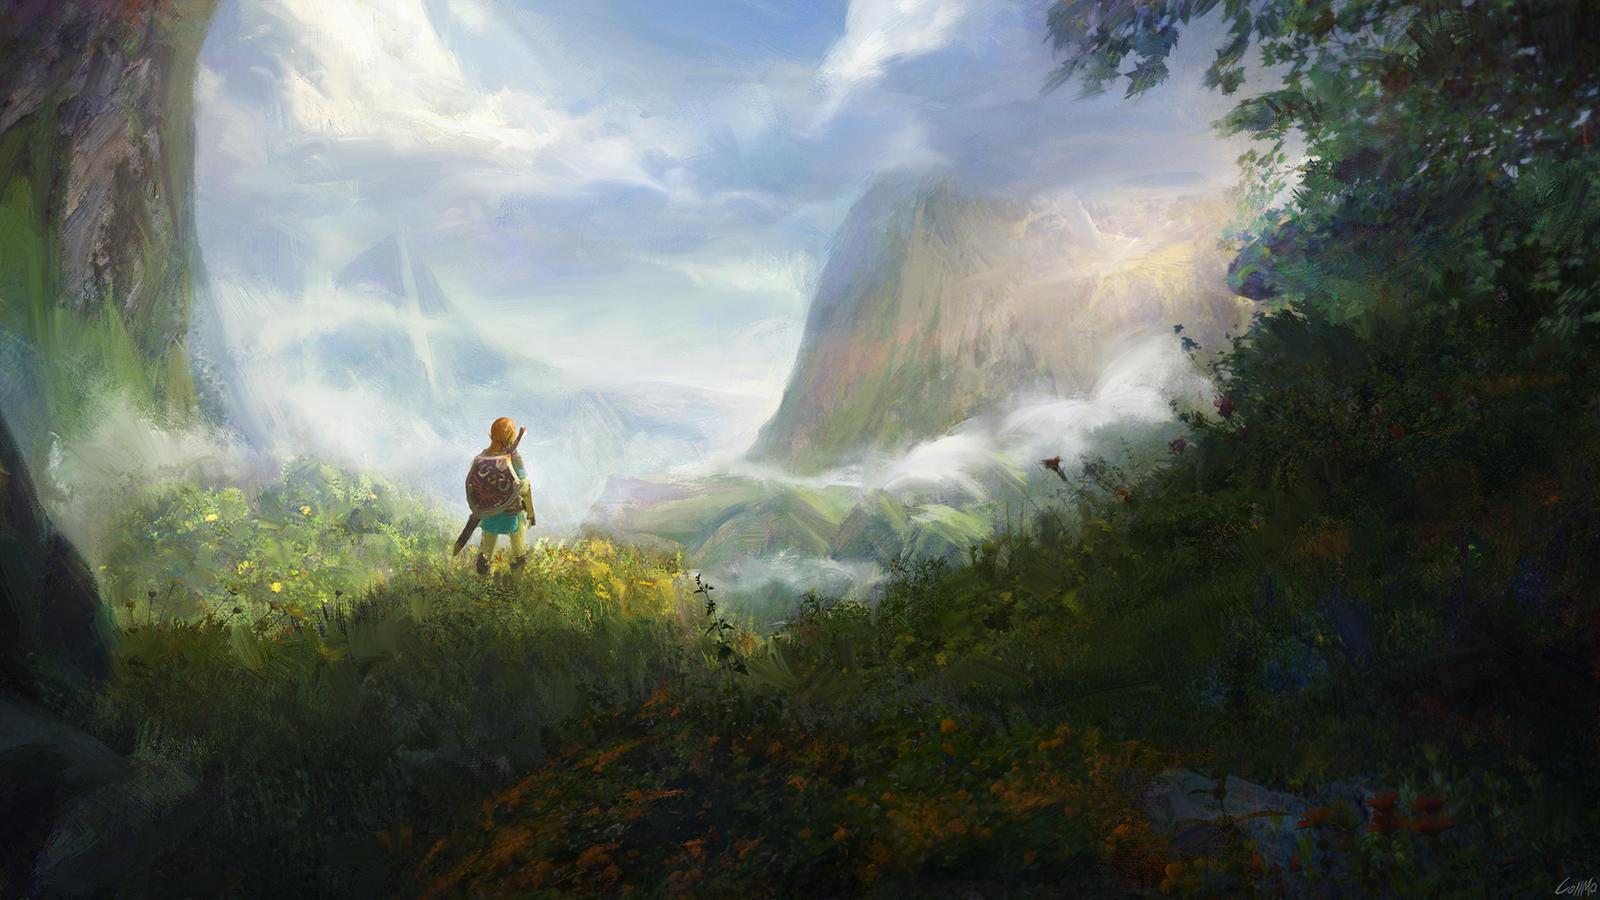 The Legend of Zelda: Breath of the Wild Wallpaper by jaseyv8tfogods on  DeviantArt